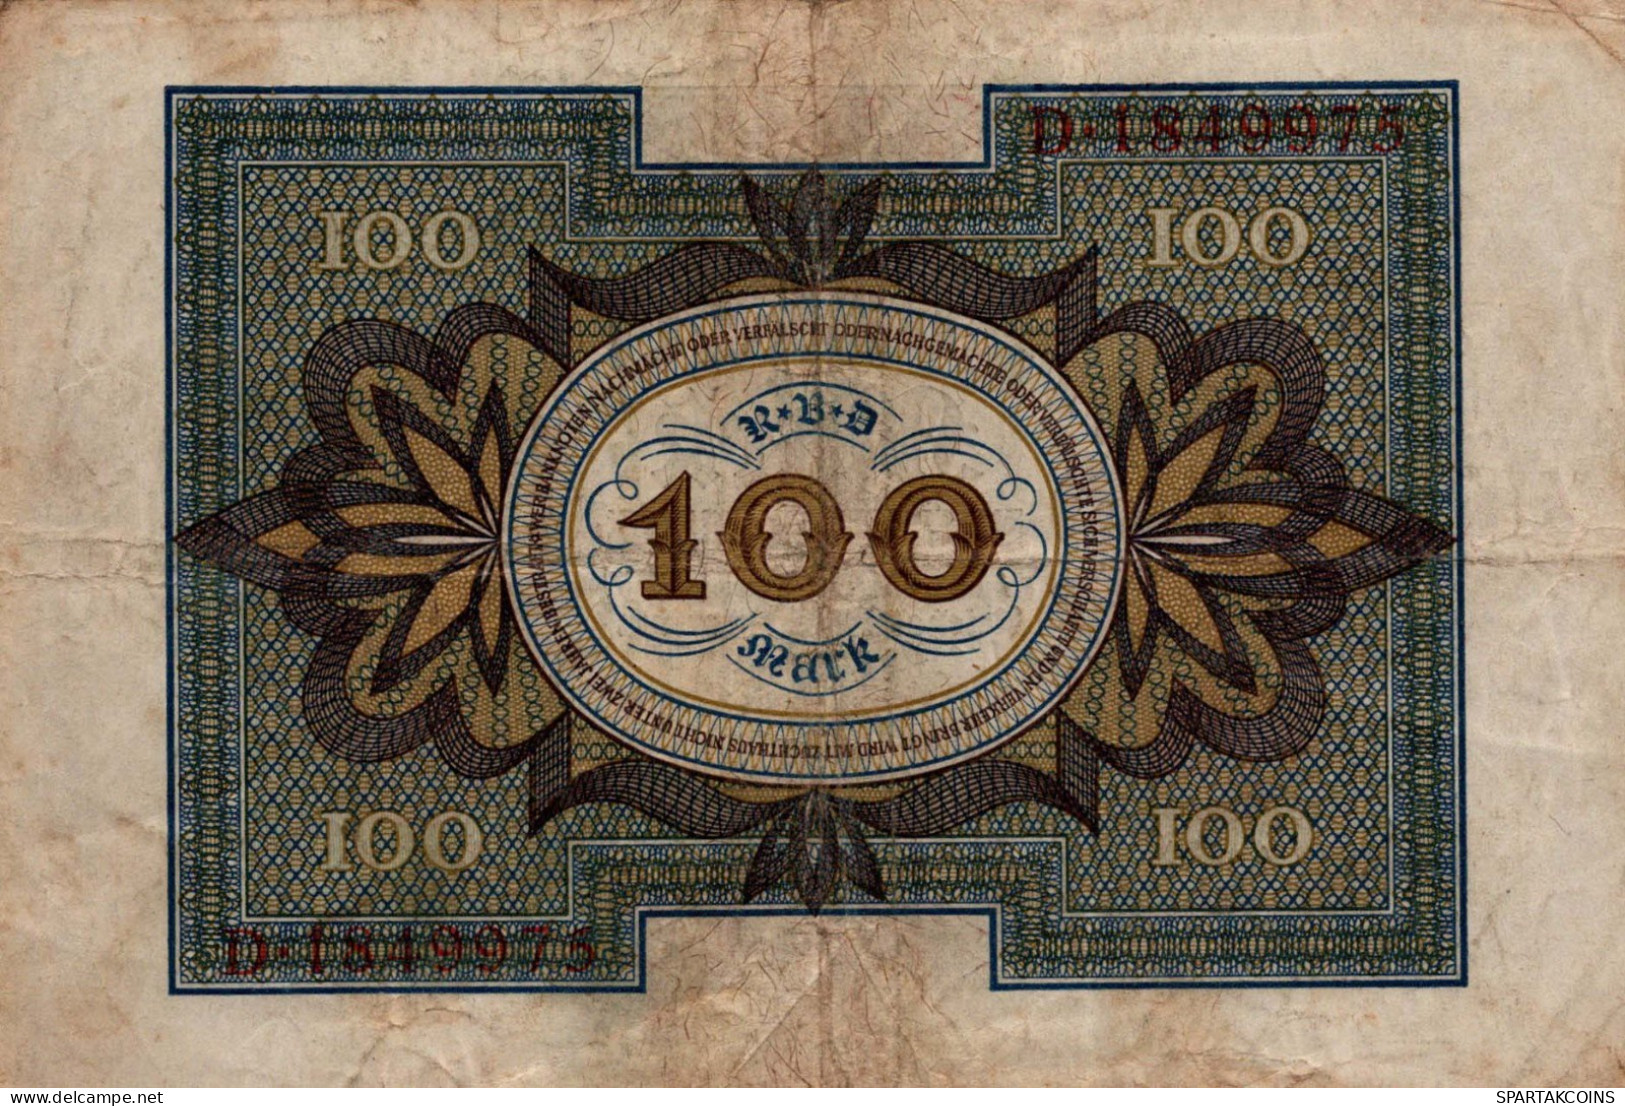 100 MARK 1920 Stadt BERLIN DEUTSCHLAND Papiergeld Banknote #PL097 - [11] Lokale Uitgaven